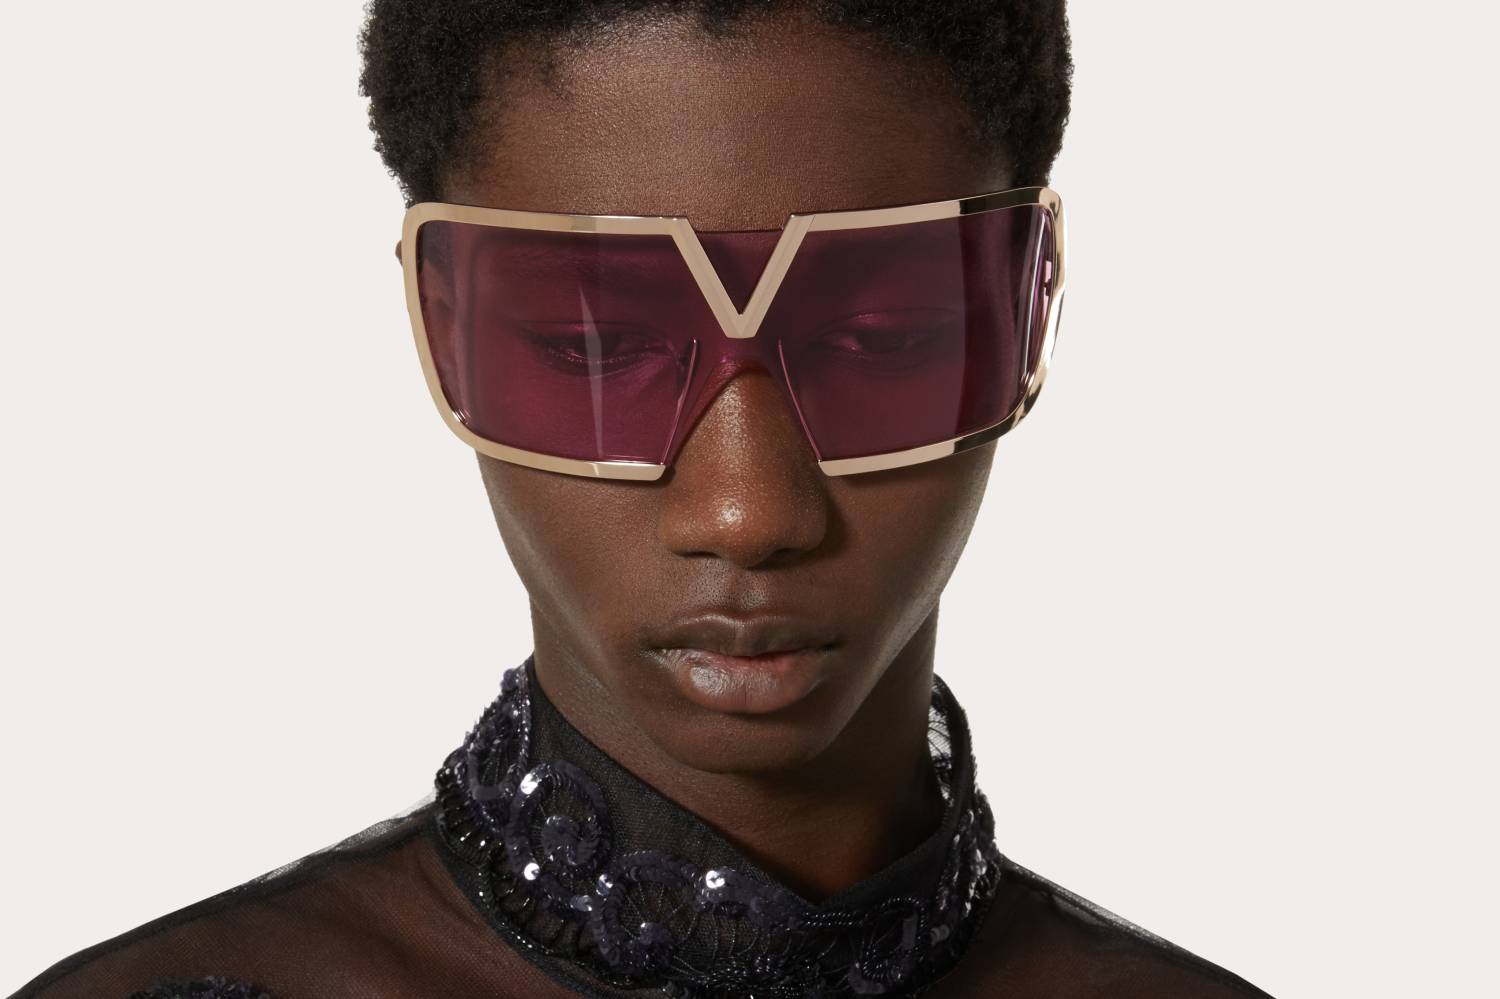 Louis Vuitton My Monogram Soft Cat Eye Sunglasses Gradient Pink to Cream Acetate. Size W